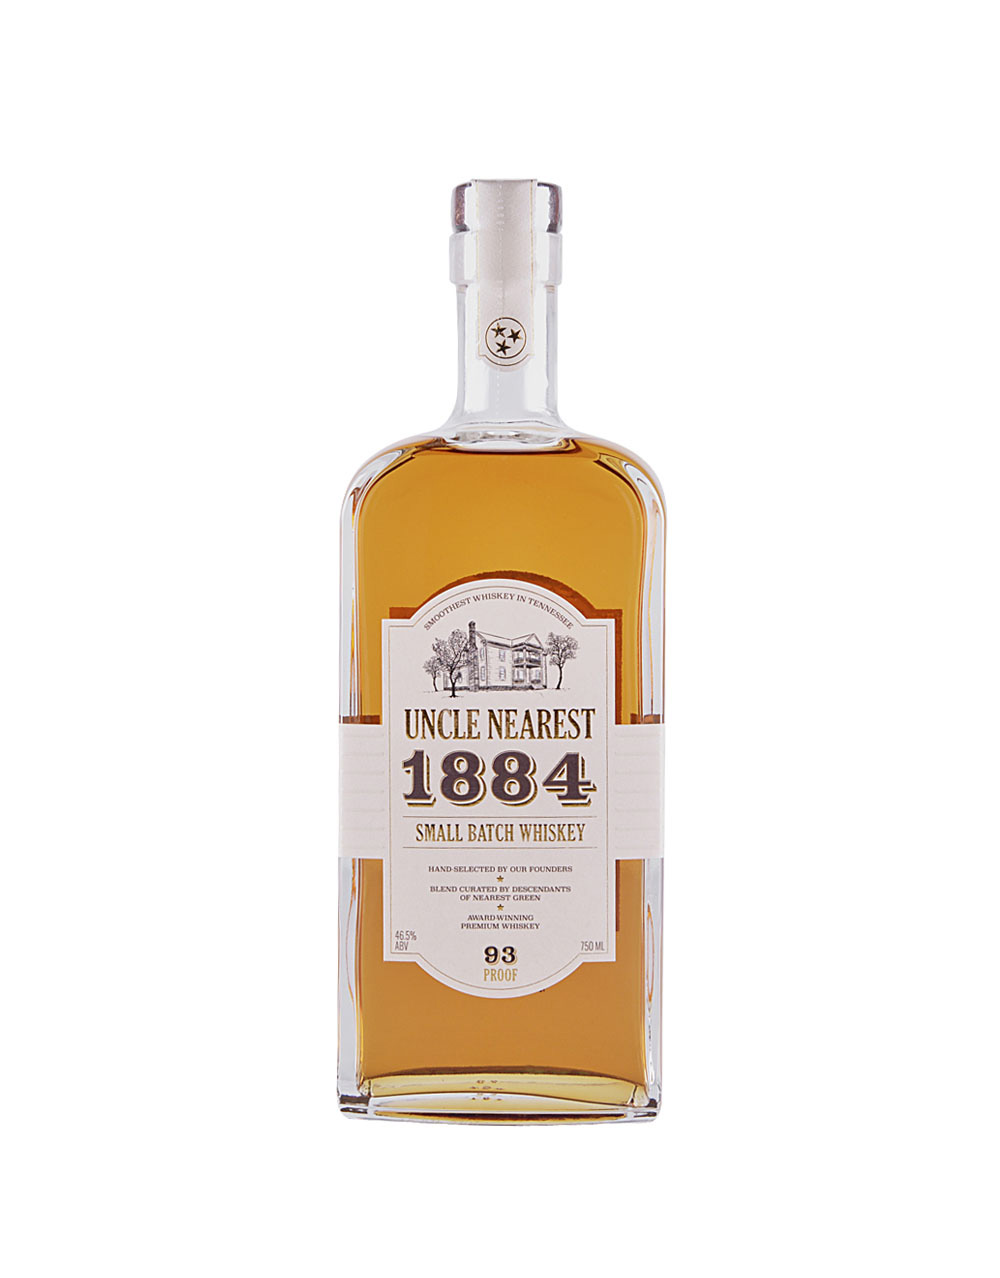 Jim Beam Distiller's Cut Bourbon Whiskey